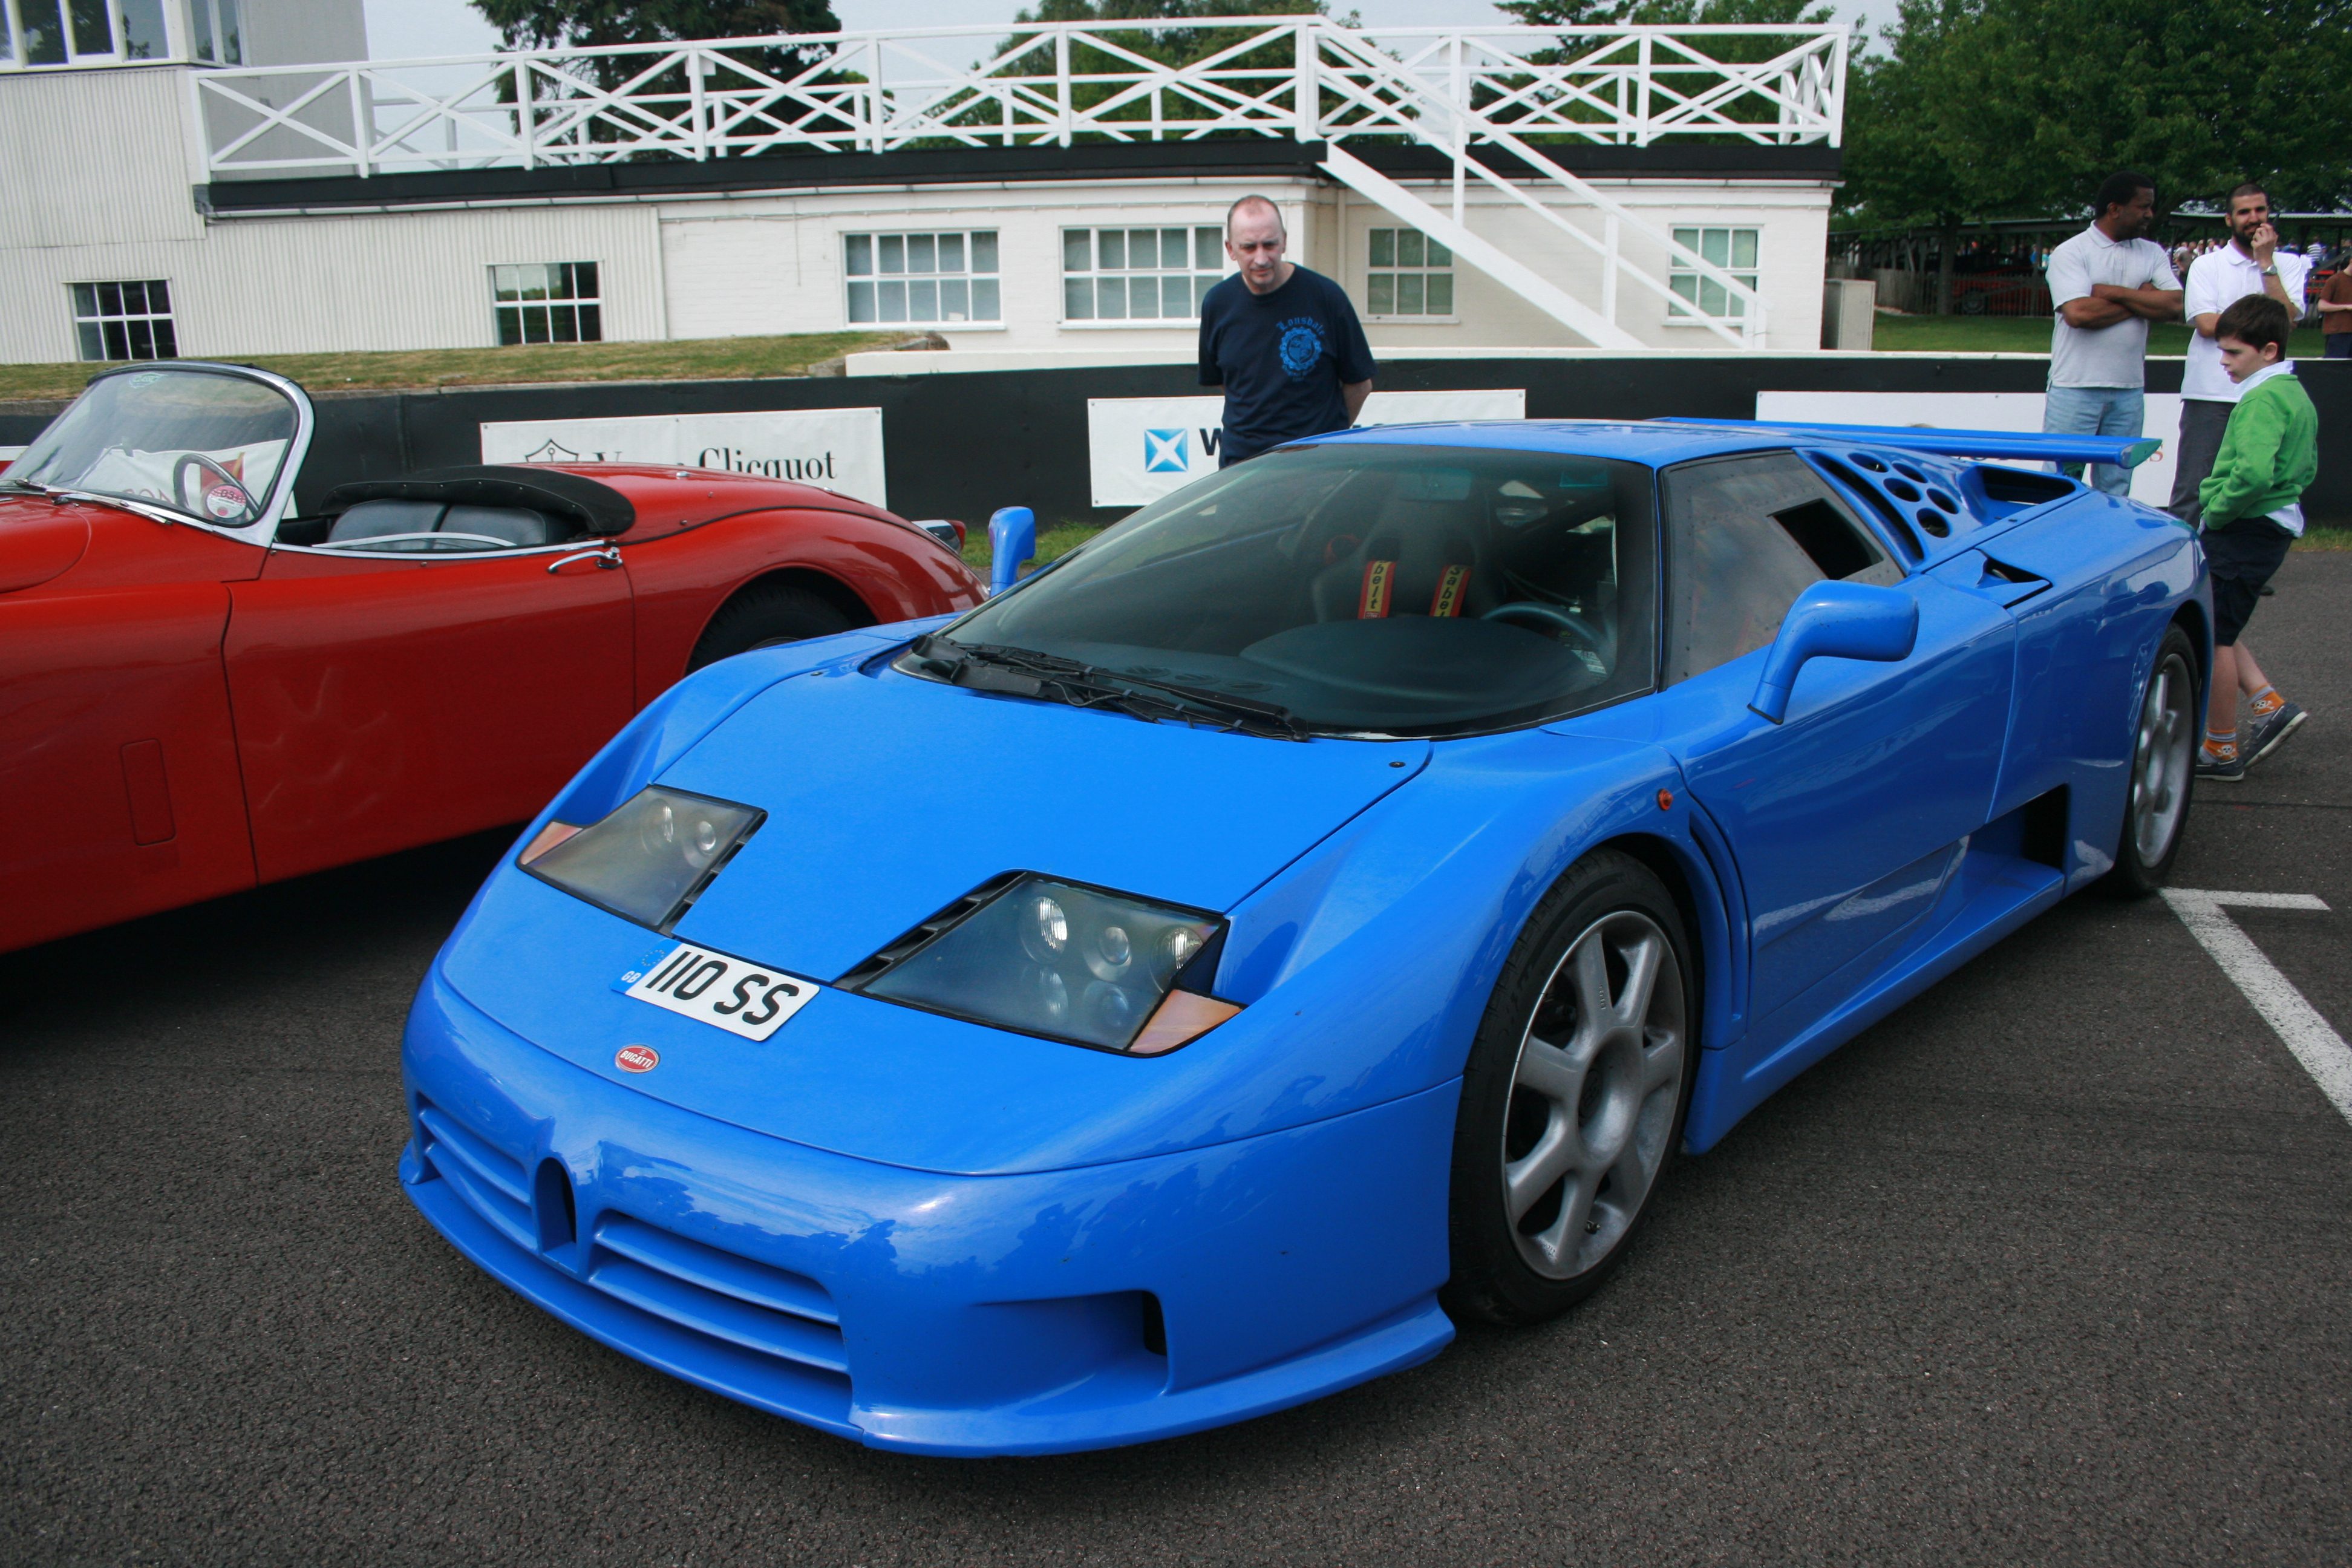 Bugatti_EB110_-_Flickr_-_Supermac1961.jpg